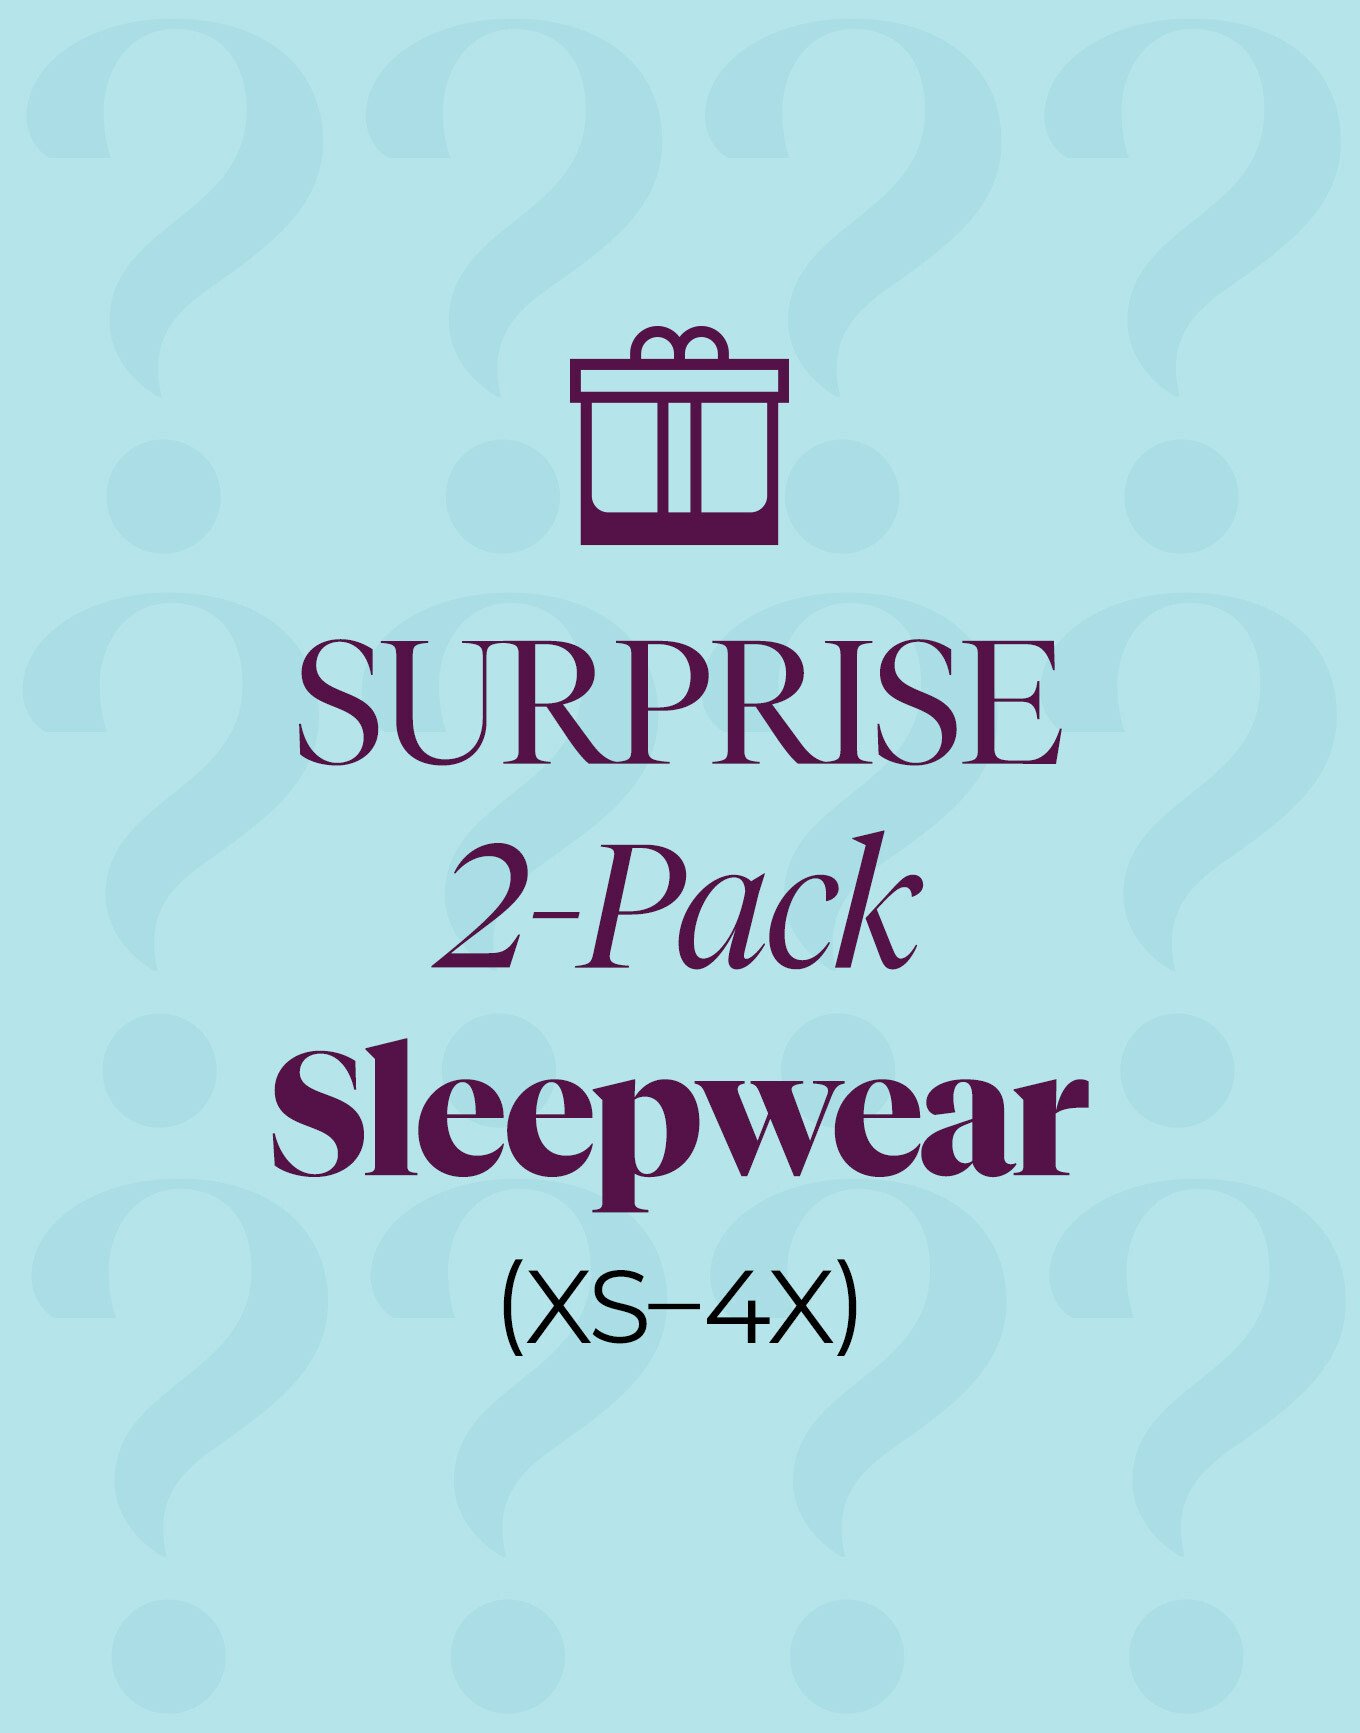 2-Pack Sleepwear Surprise Box